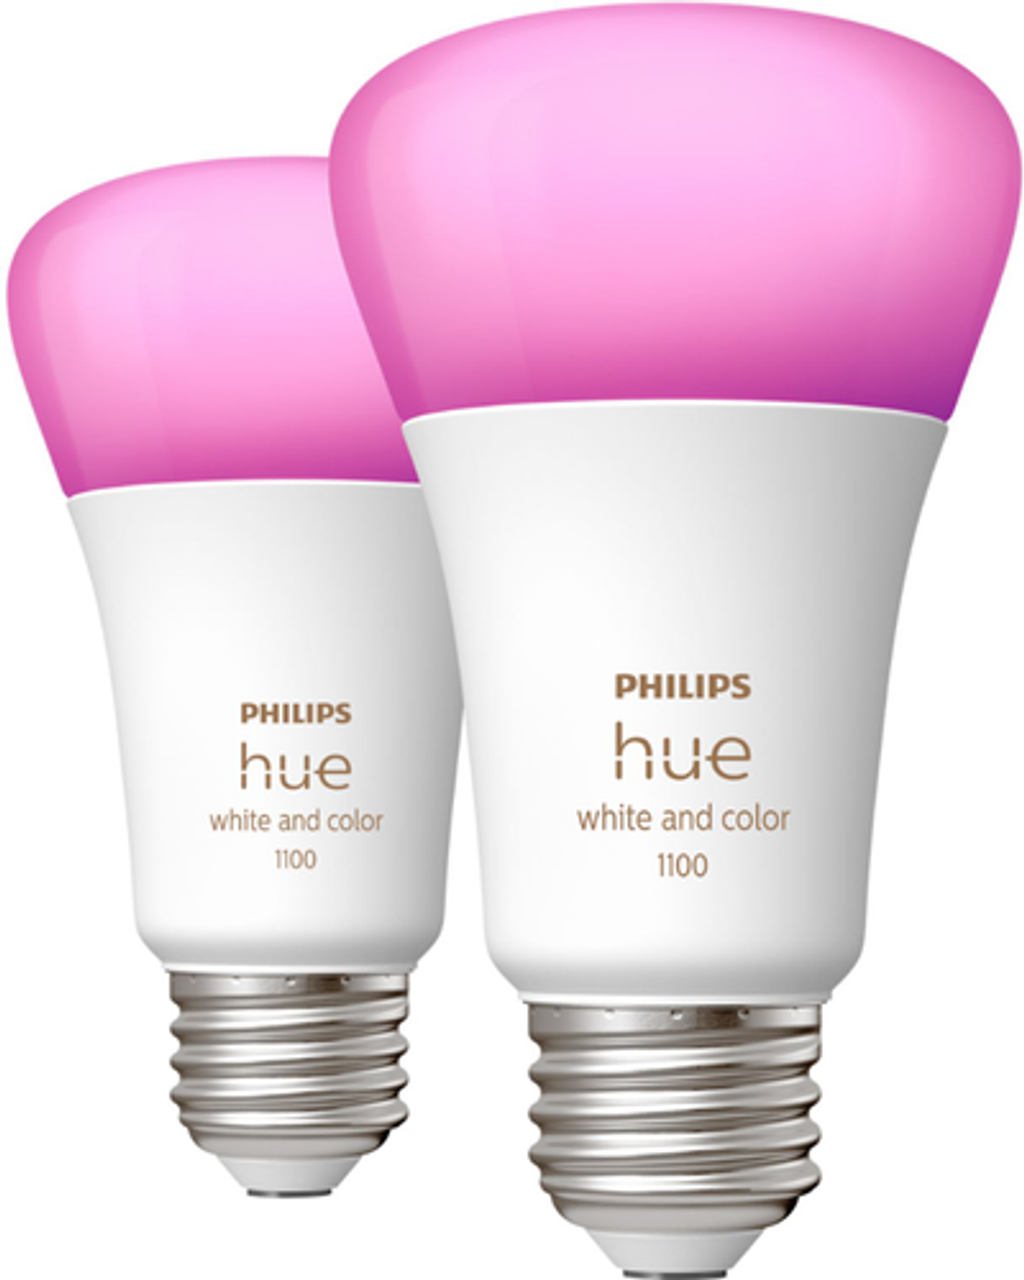 Philips - Hue White and Color Ambaice A19 Bluetooth 75W Smart LED Bulbs (2-pack)